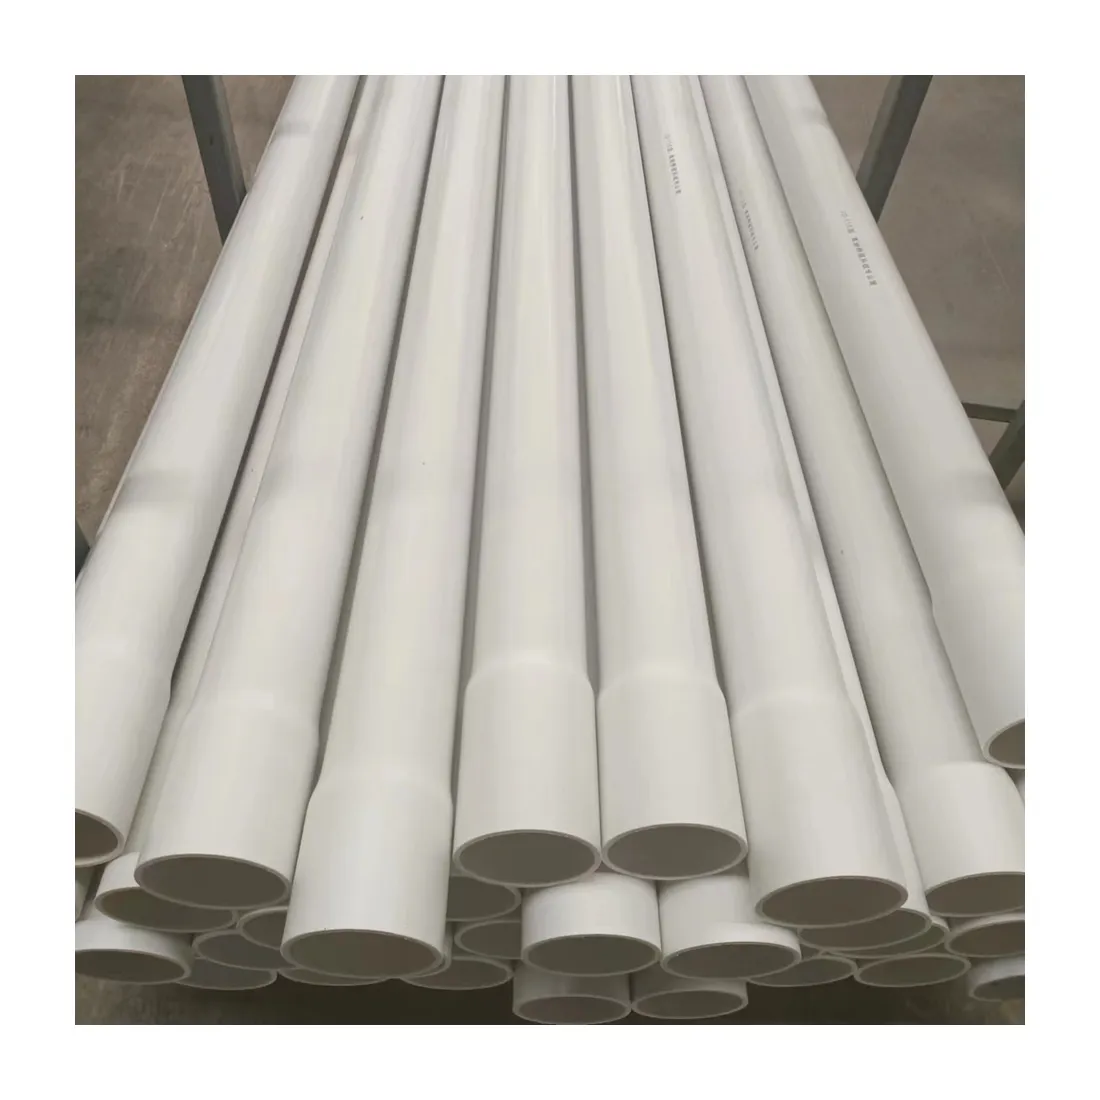 Werksverkauf ASTM D2729 Polyvinylchlorid-PVC-Abflussrohr mit Schleifendeel Ende 3 Zoll 4 Zoll 6 Zoll